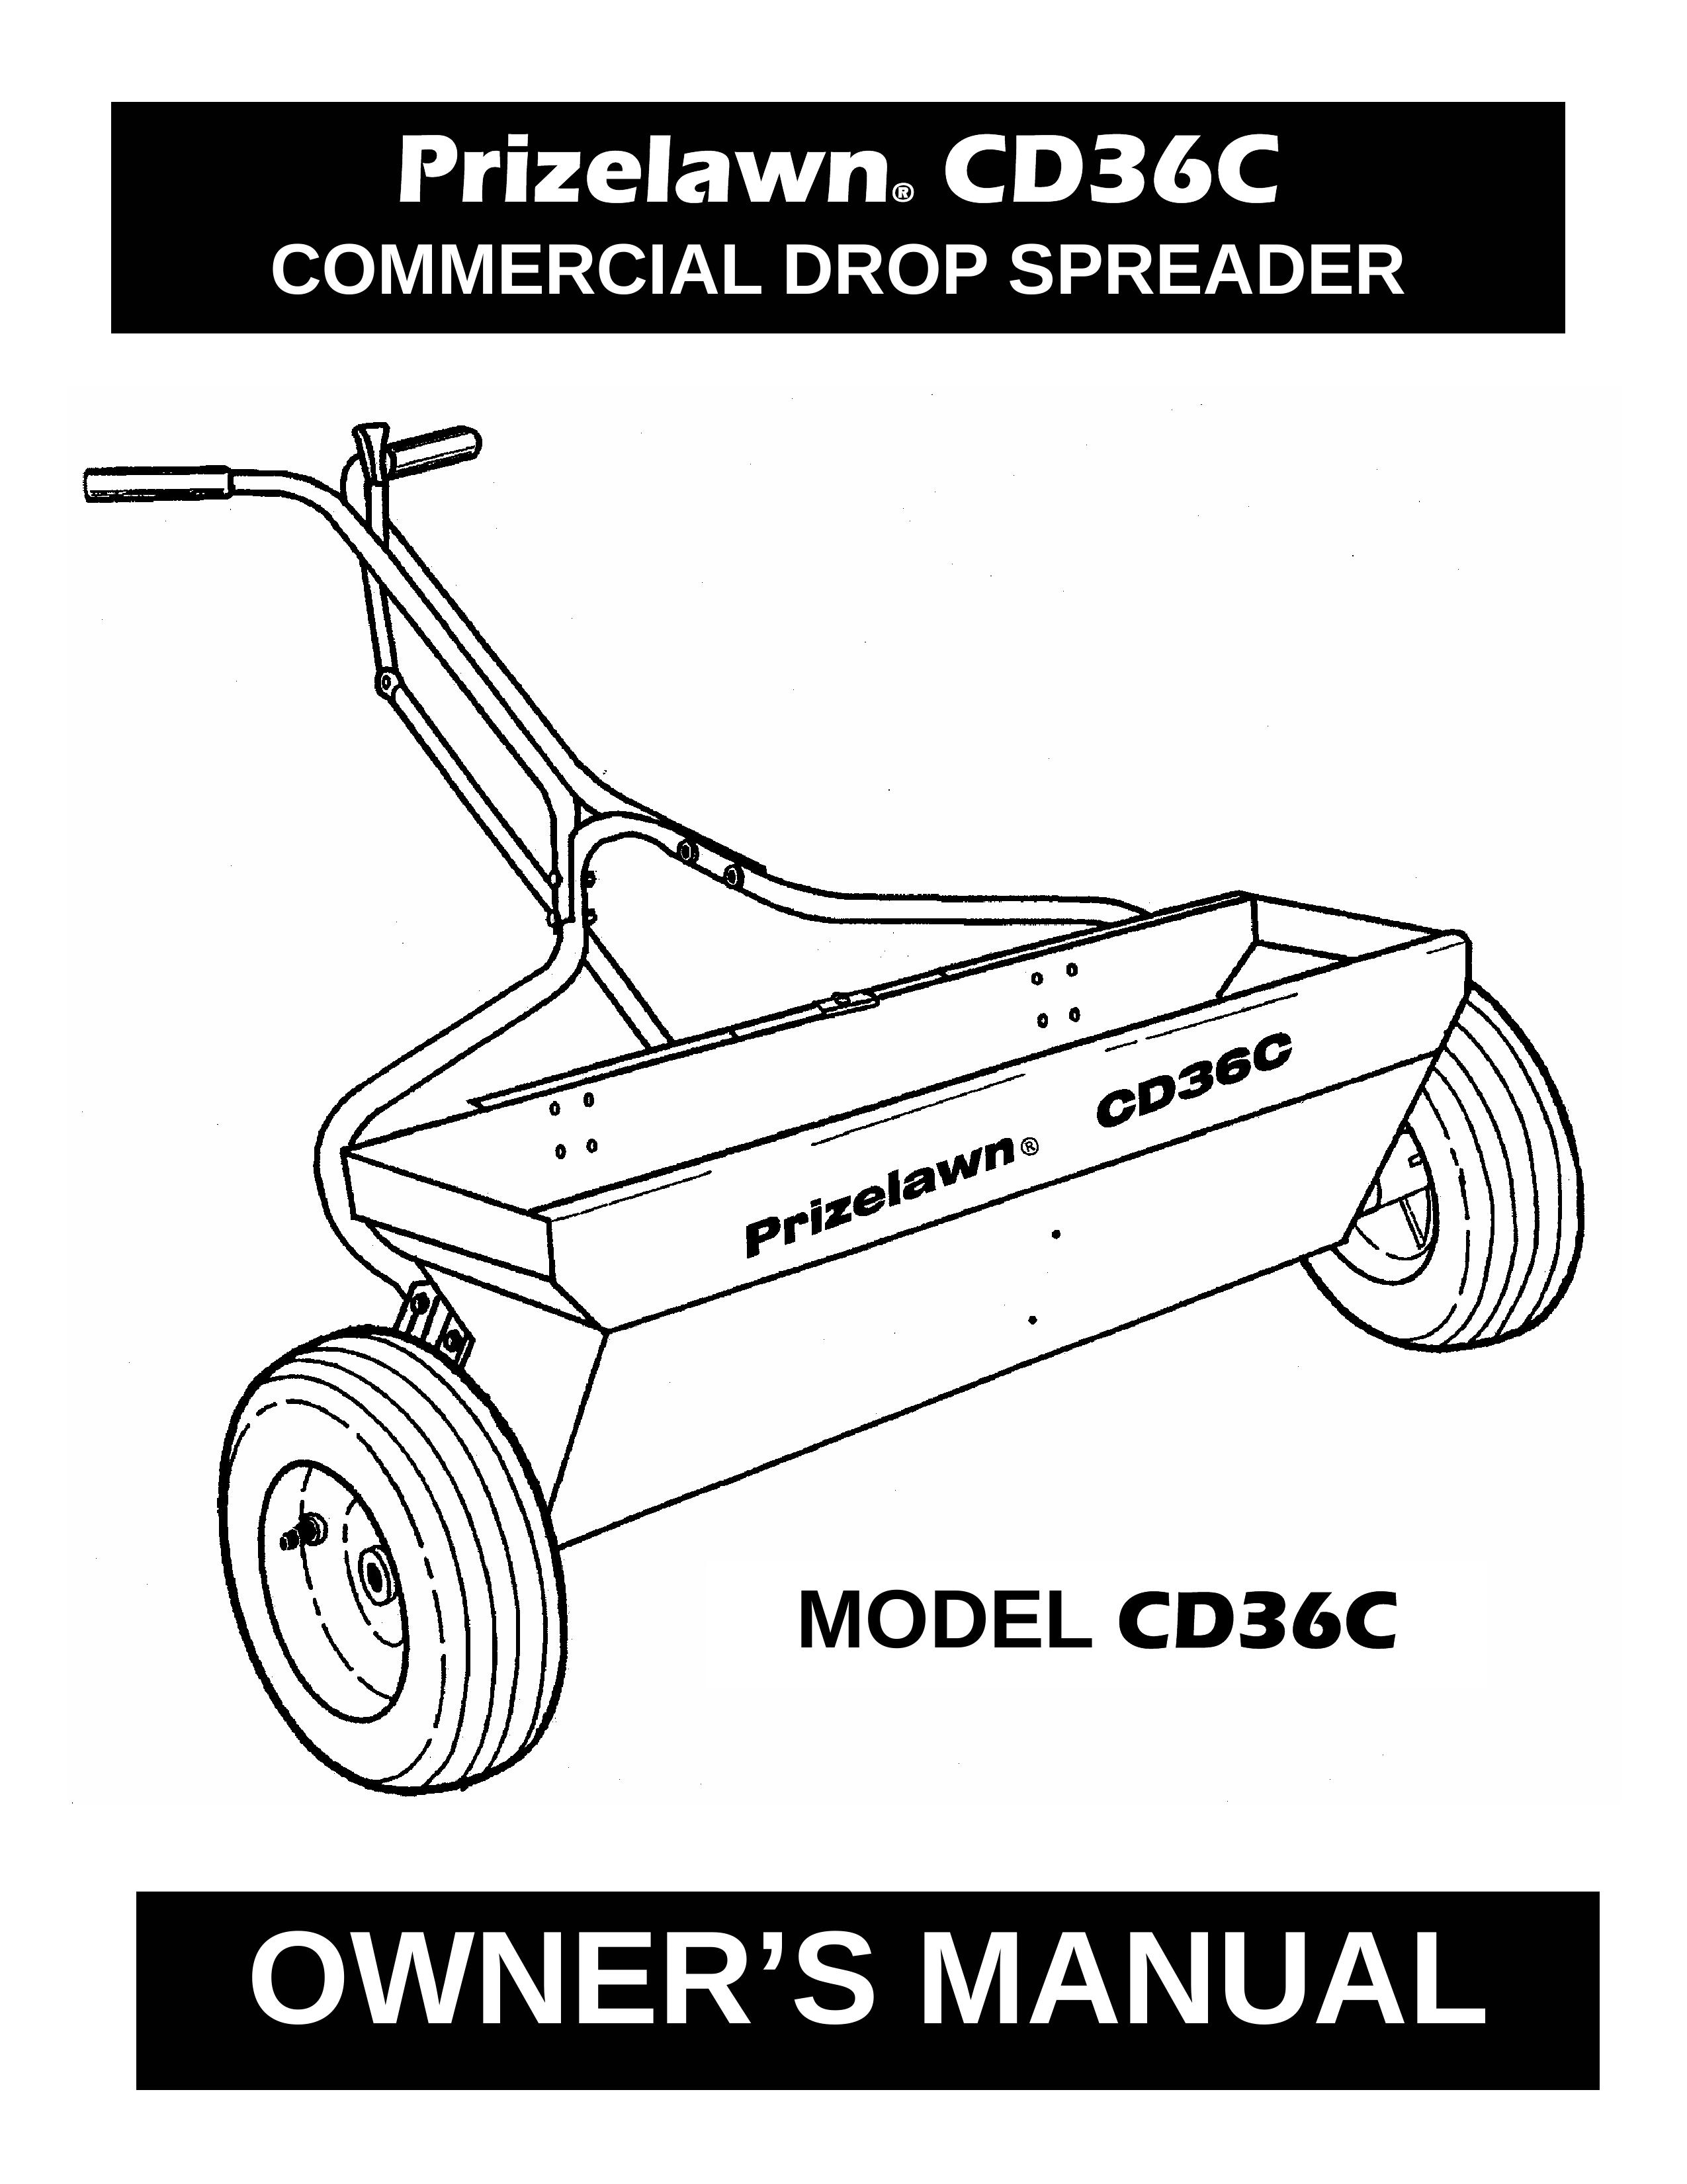 Scotts CD36C Spreader User Manual